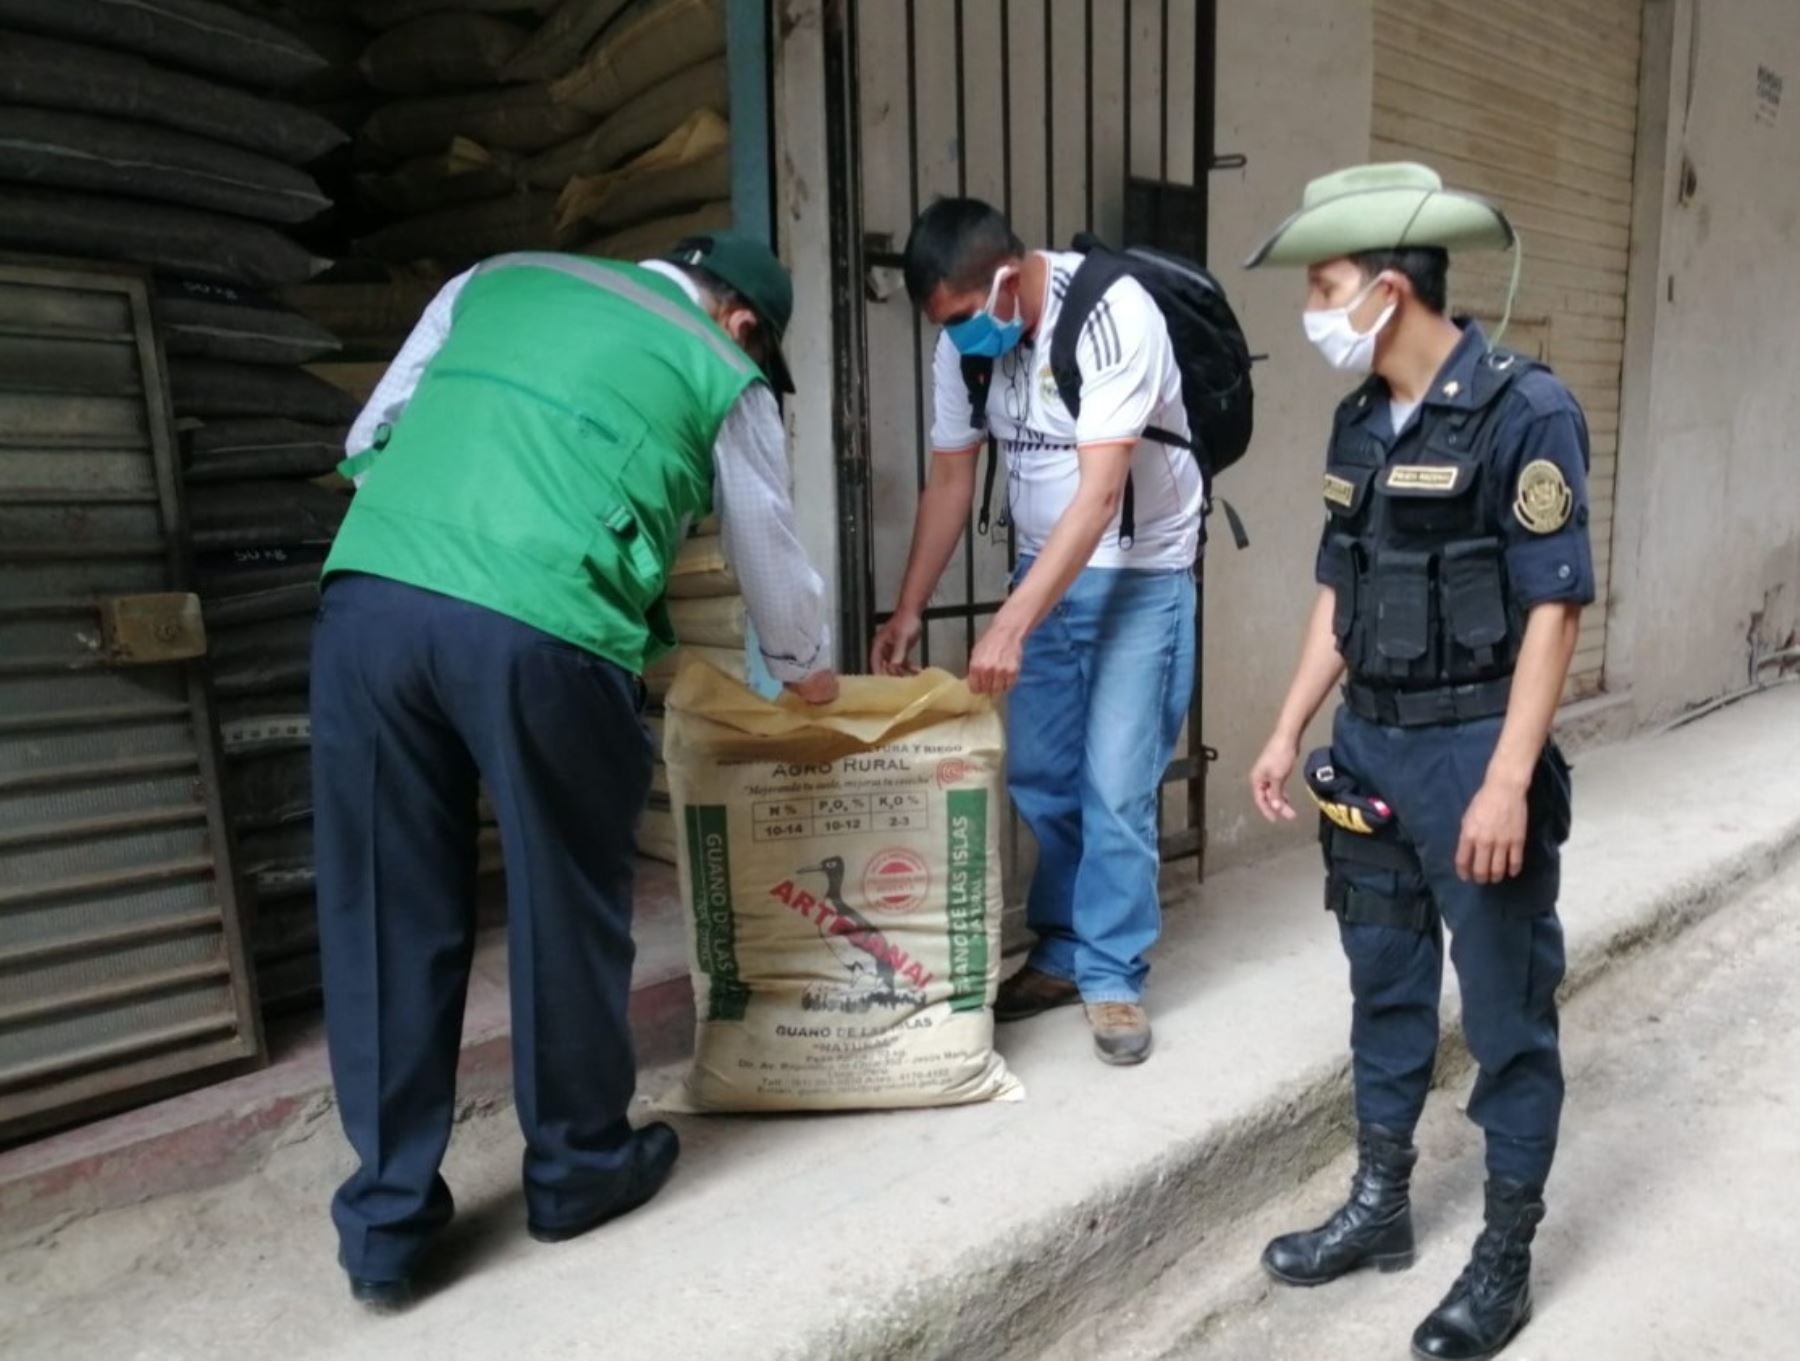 Autoridades de Cajamarca incautan 14 toneladas de fertilizante de dudosa procedencia que eran vendidos como guano de las islas. ANDINA/Difusión